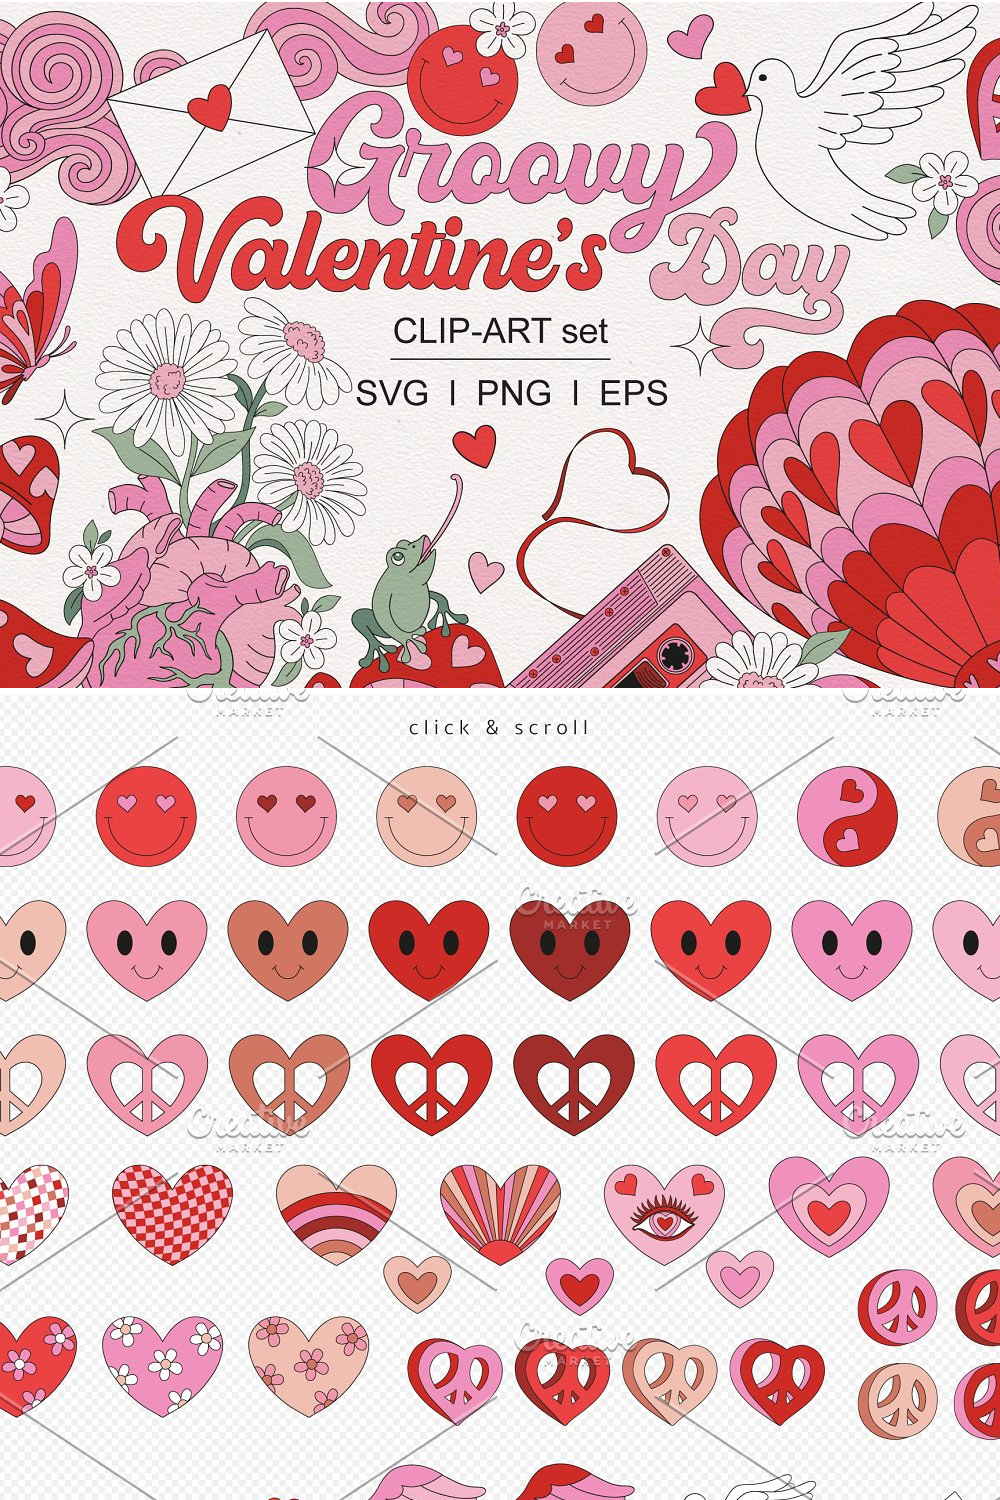 Illustrations retro groovy hippie valentine day of pinterest.